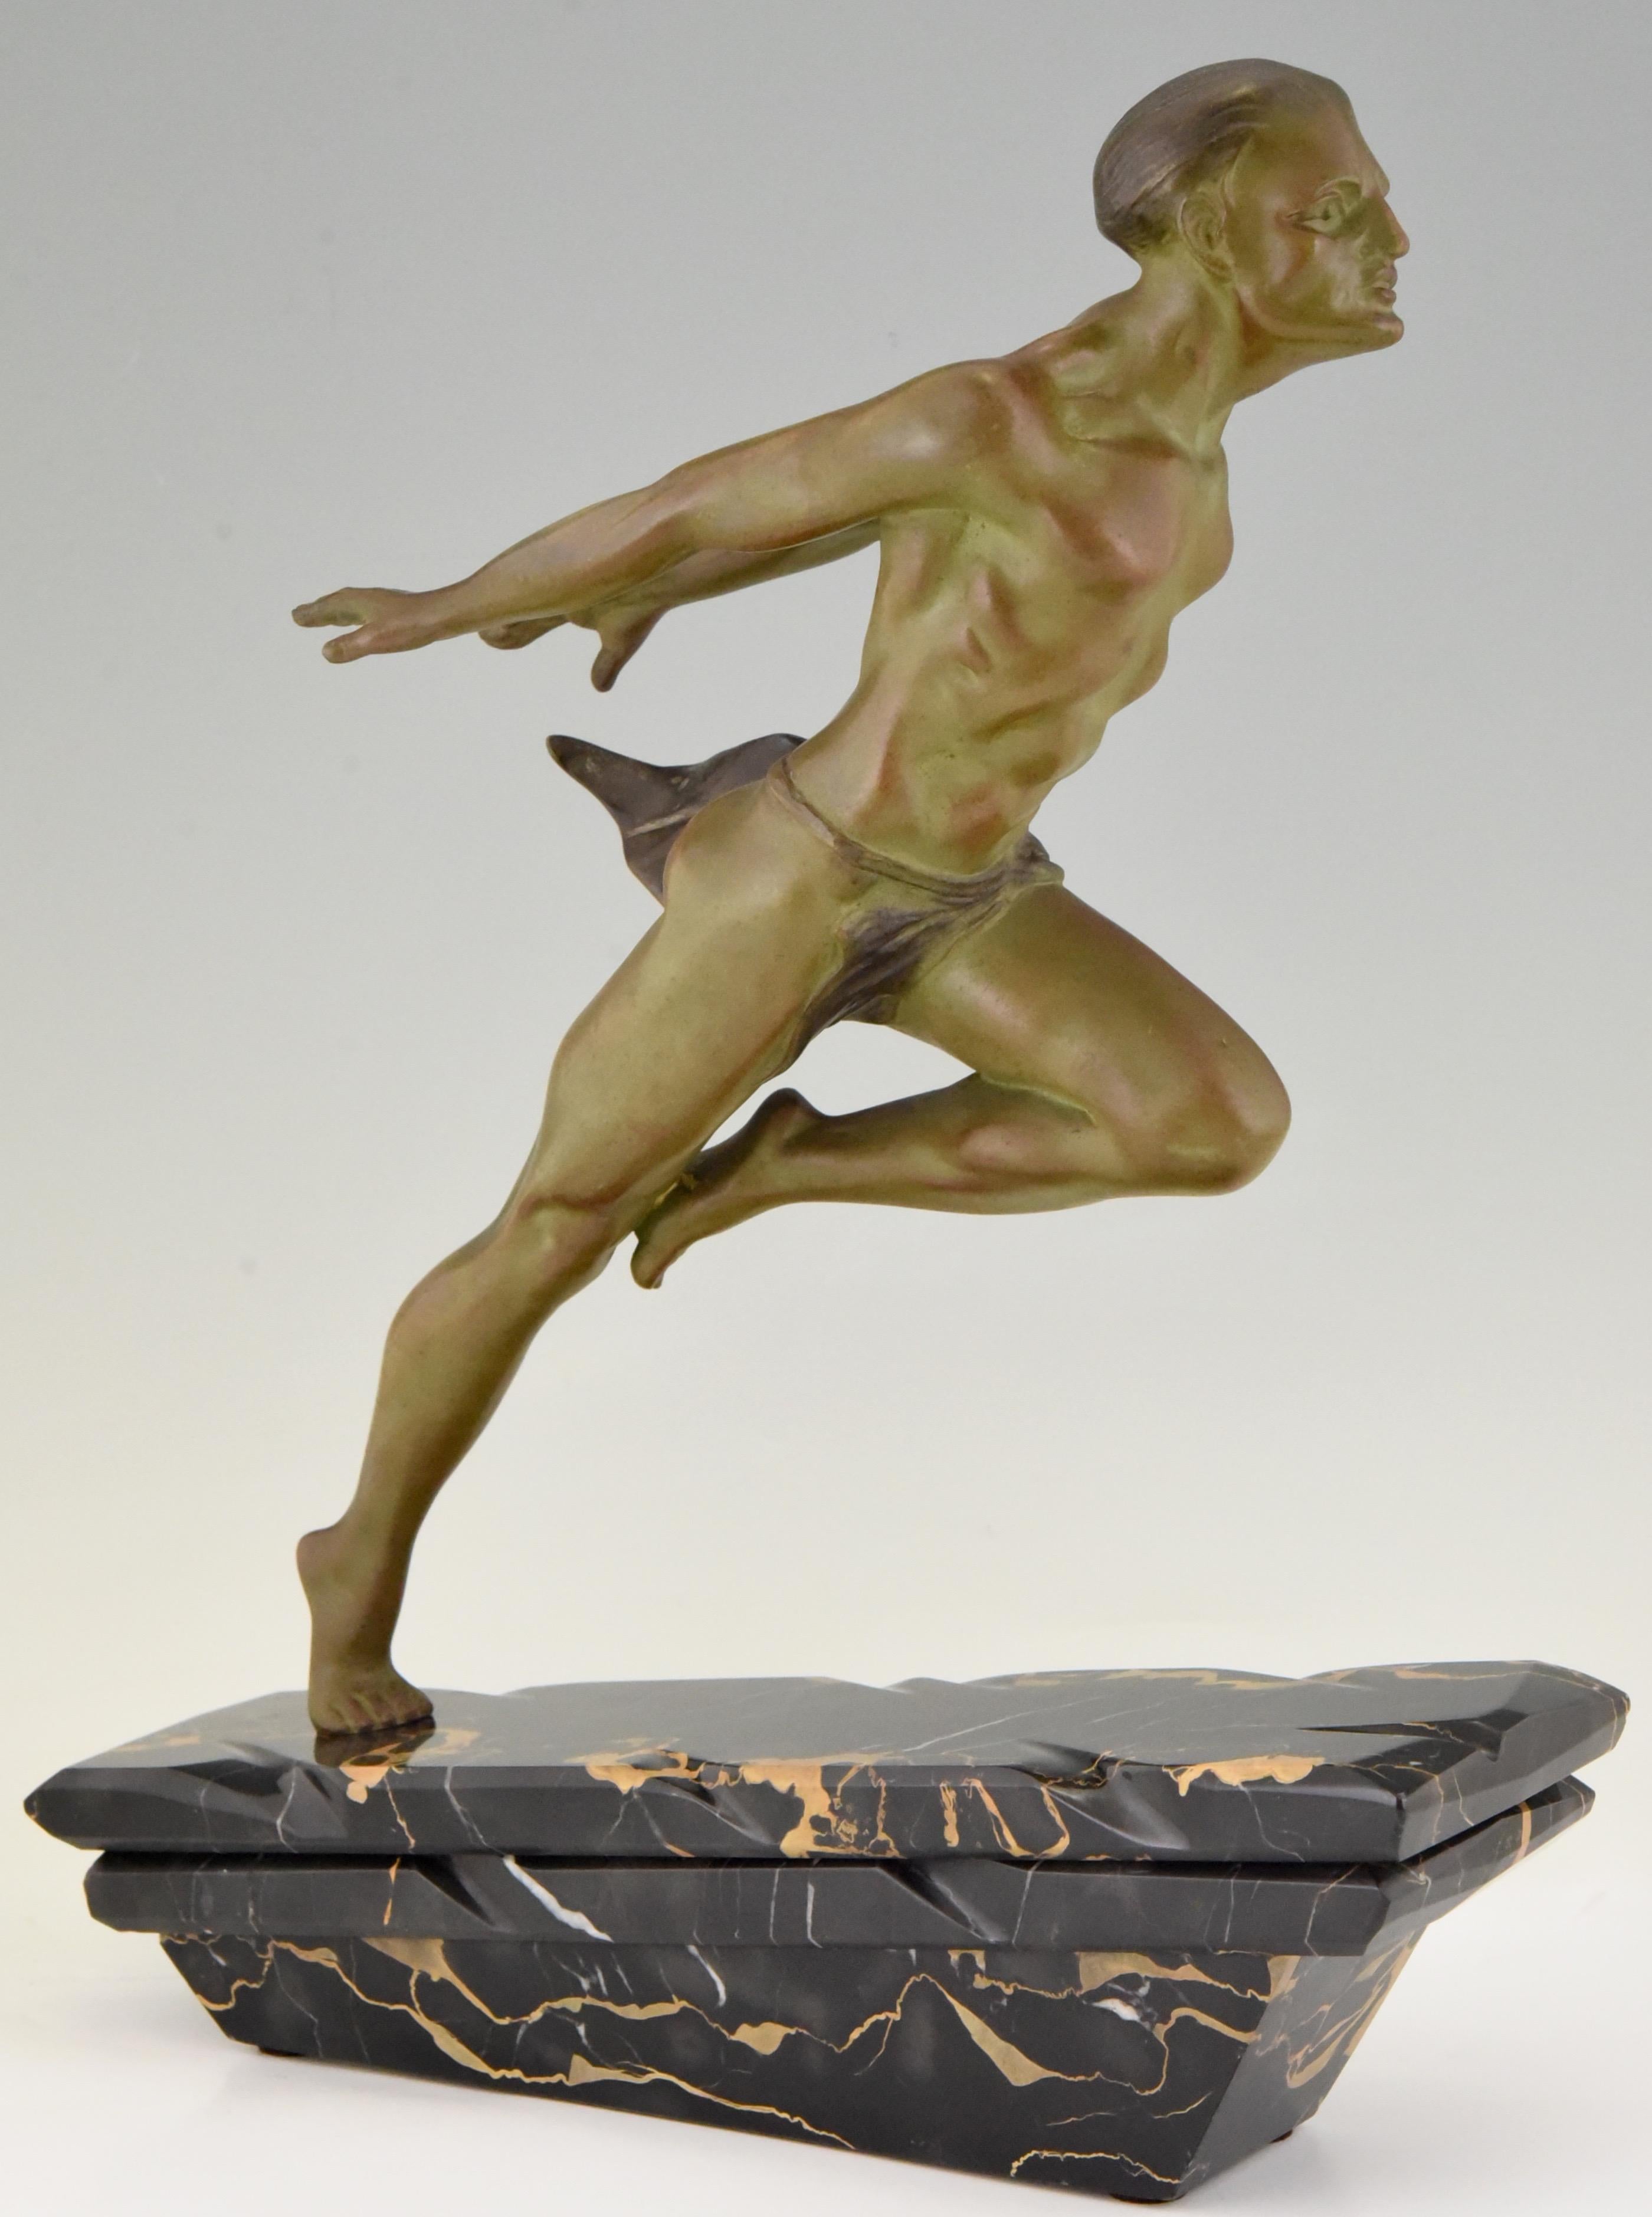 Mid-20th Century Art Deco Sculpture Running Man or Athlète L. Valderi, France, 1930